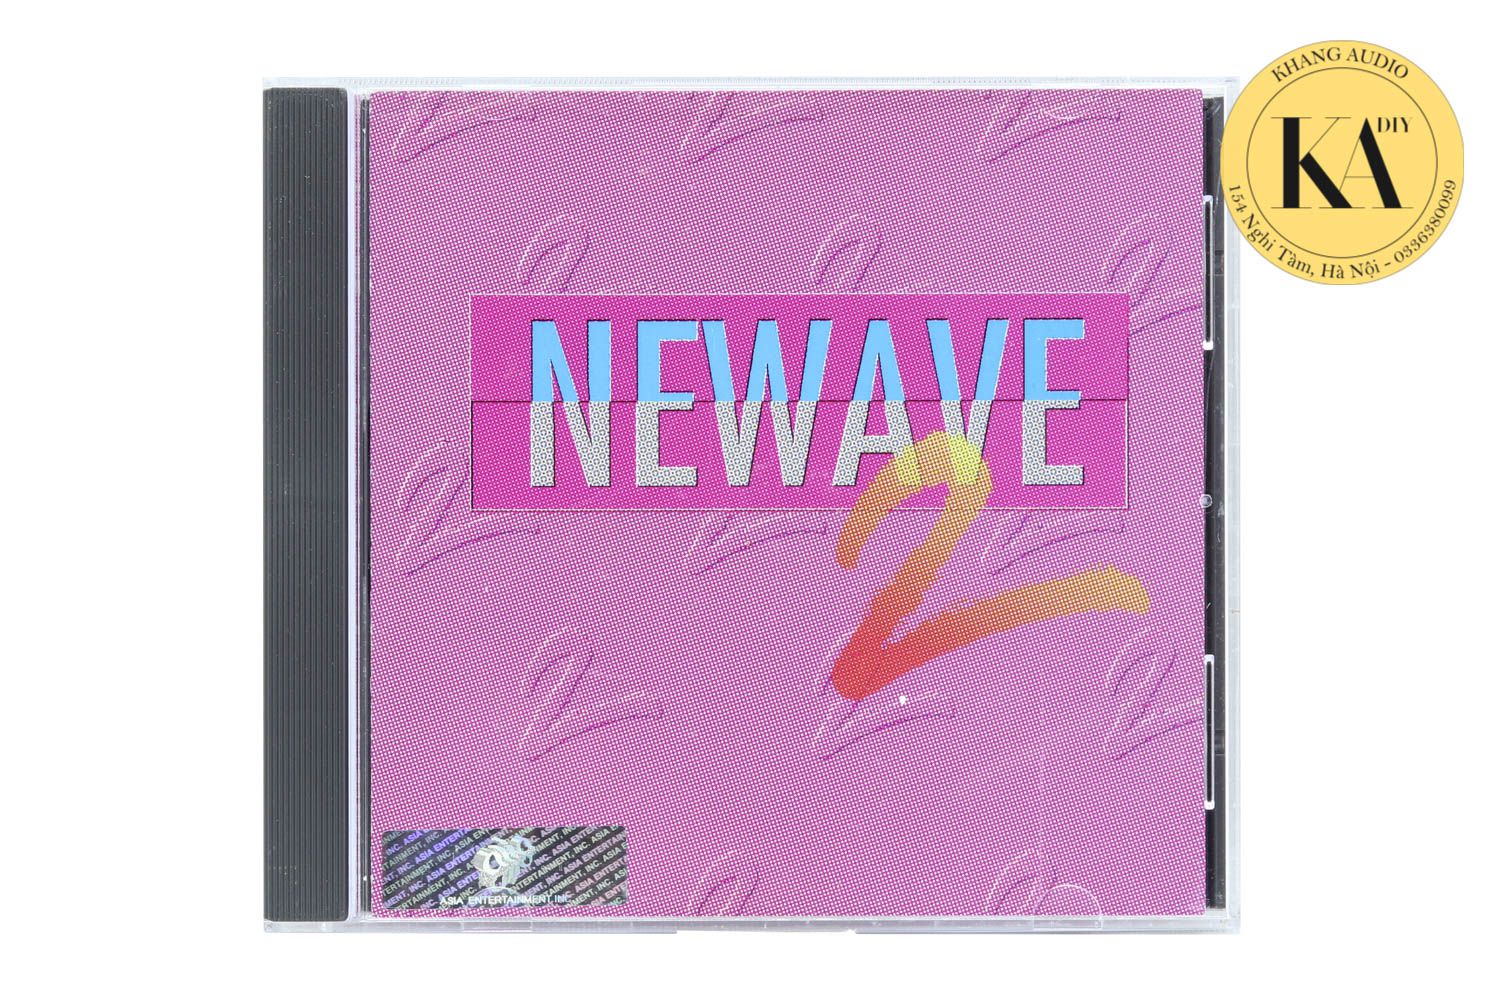 Newave 2 - Nhiều Ca Sĩ Khang Audio 0336380099